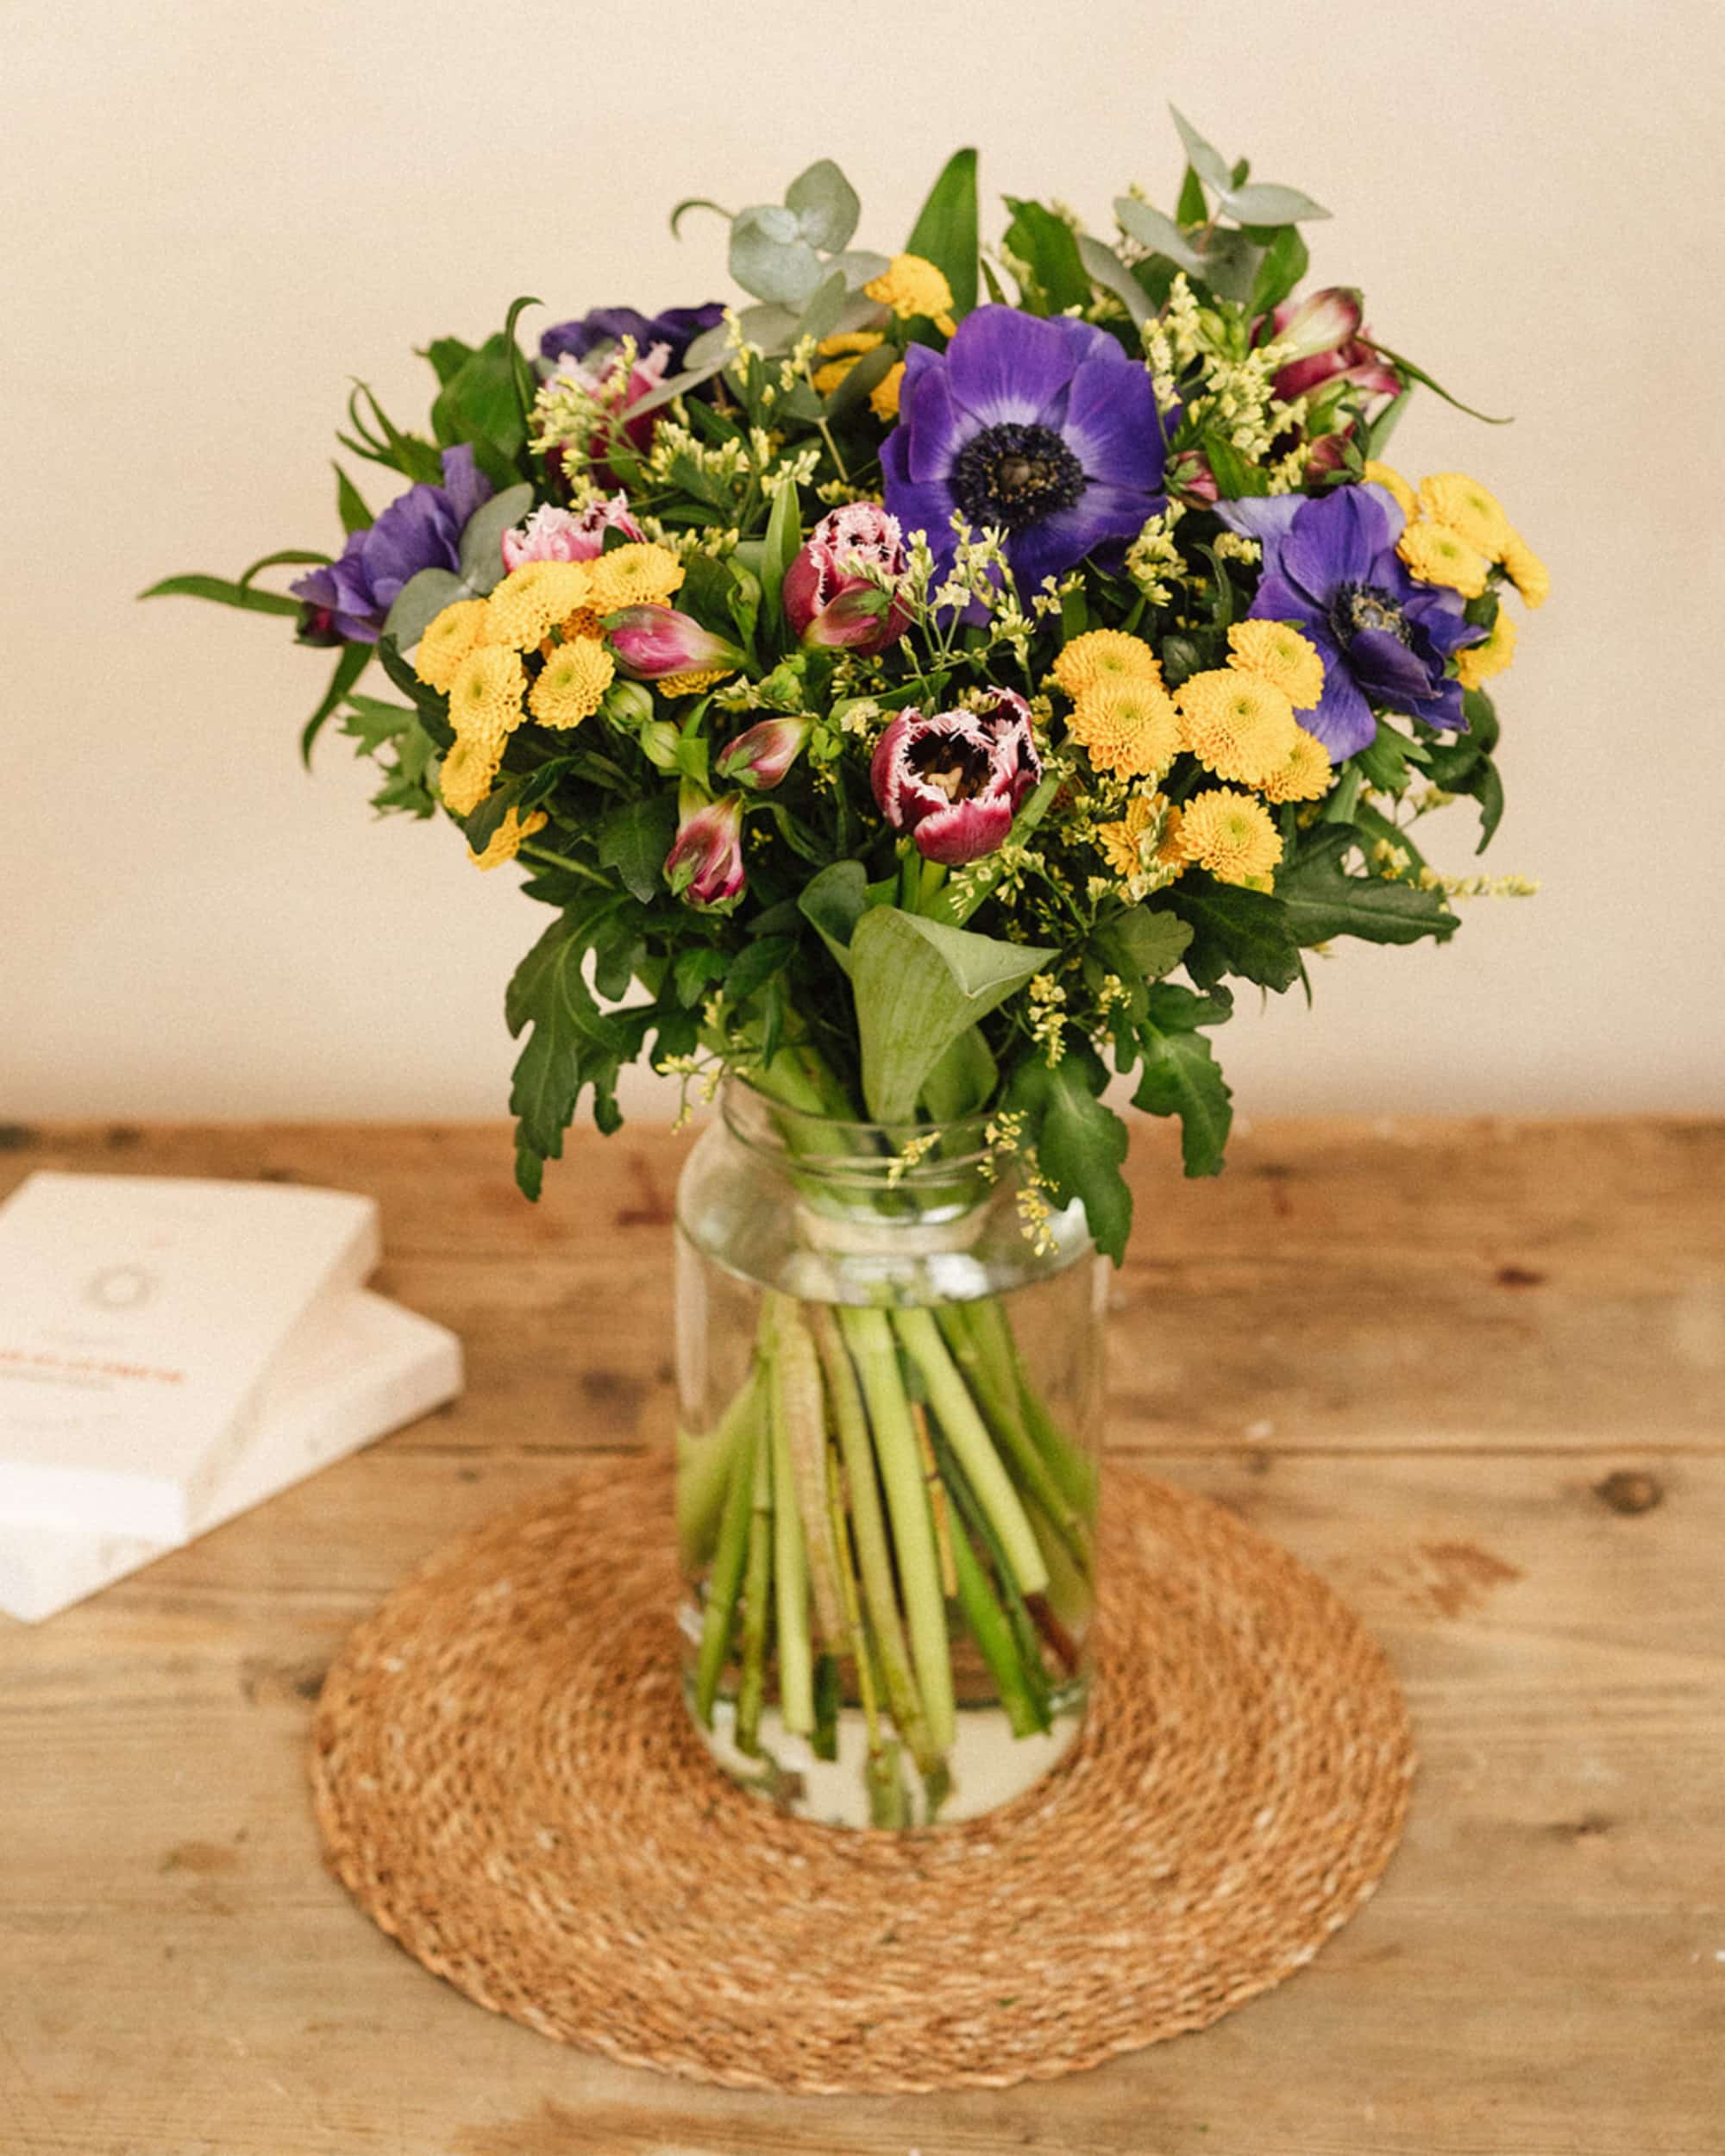 book-flowers-switzerland-24h-bouquet-vida-kanel